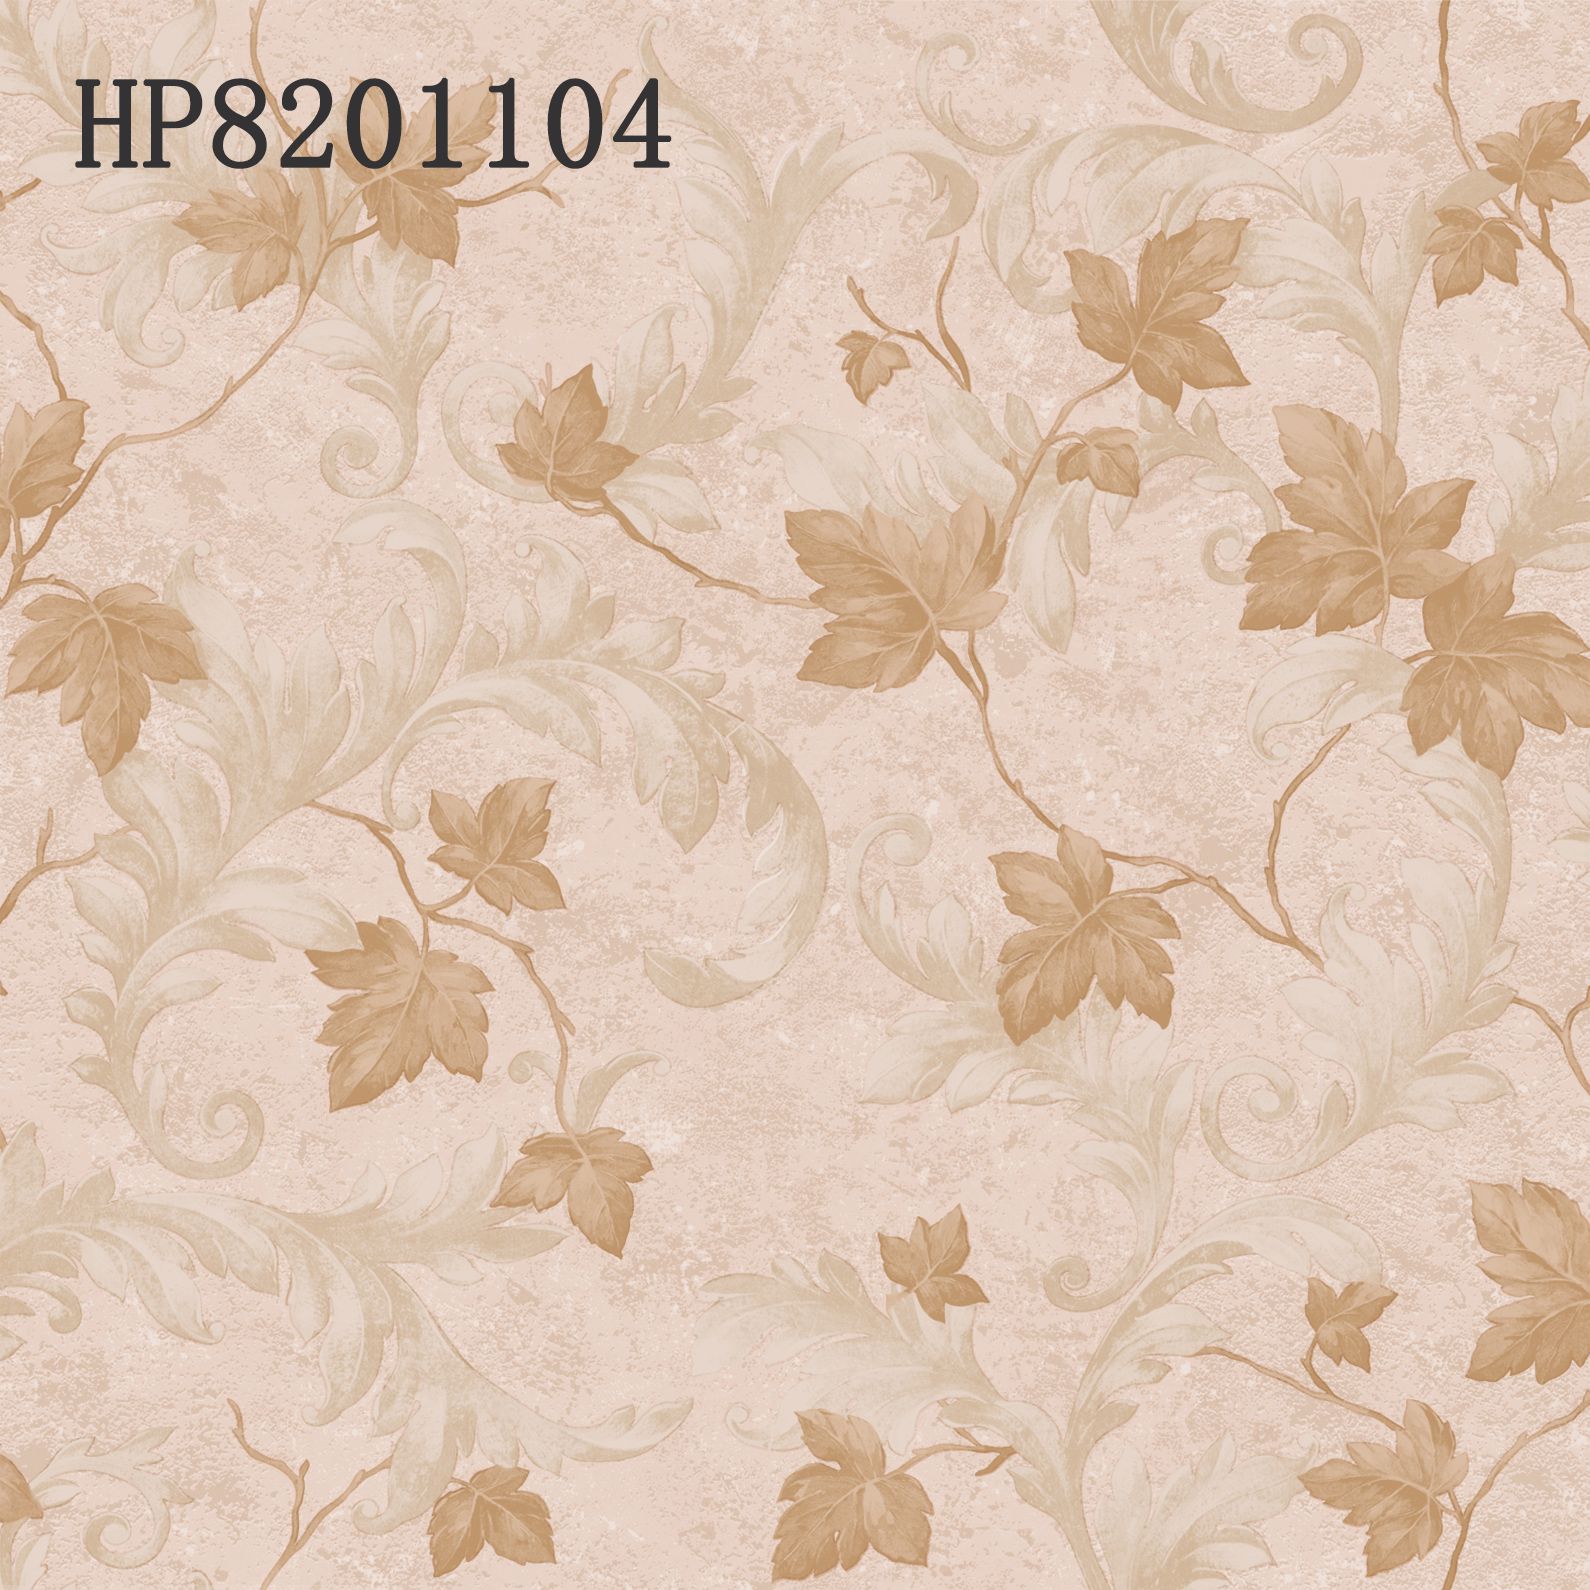 Environment-friendly Pvc Wallpapers HP82001104